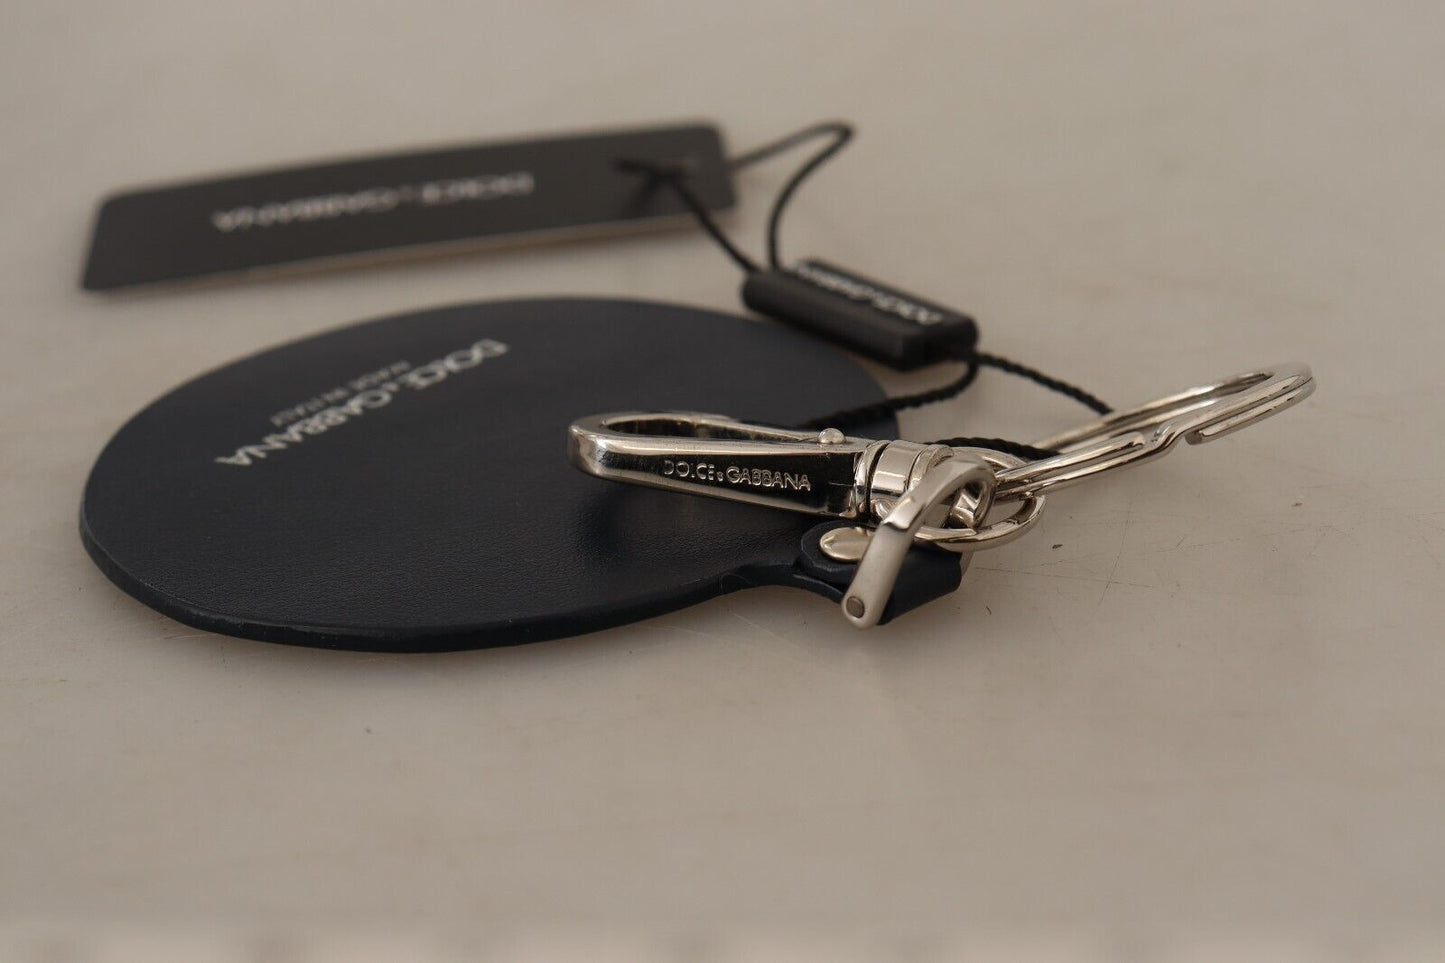 Dolce & Gabbana en cuir noir coque en métal argenté Tone Keyring Keychain